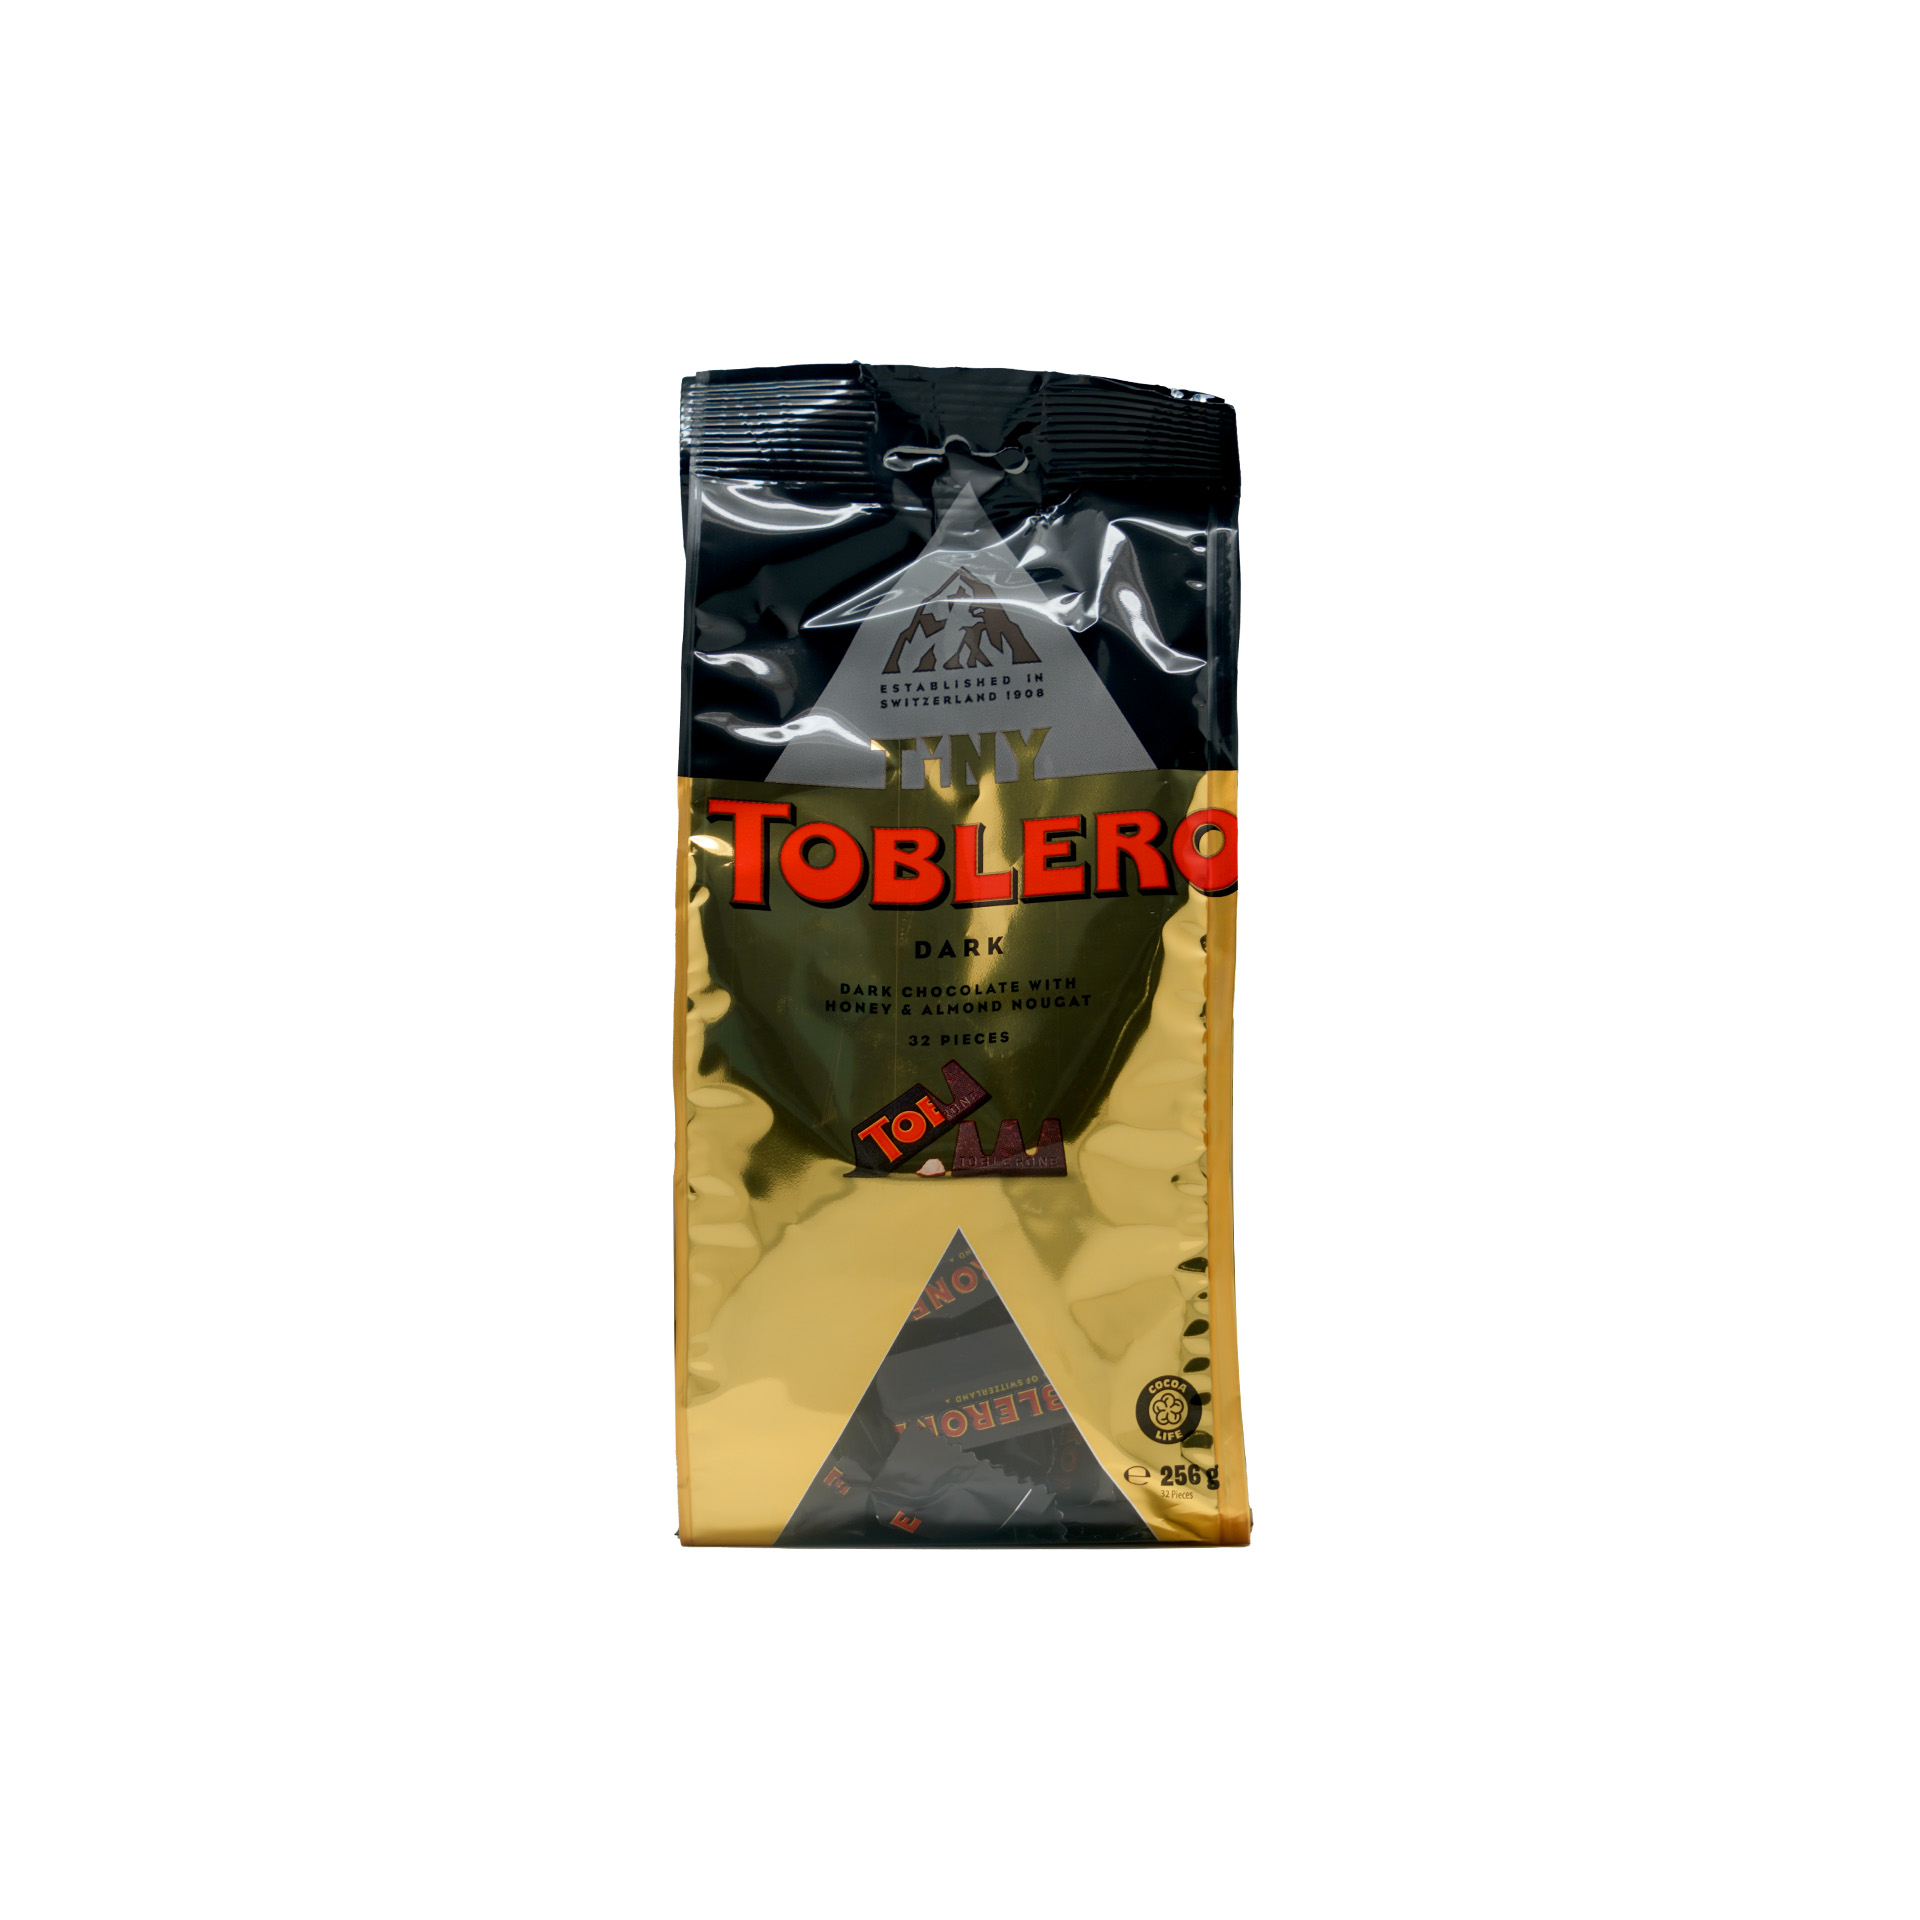 Toblerone Tiny Mono Bag Dark (256g)